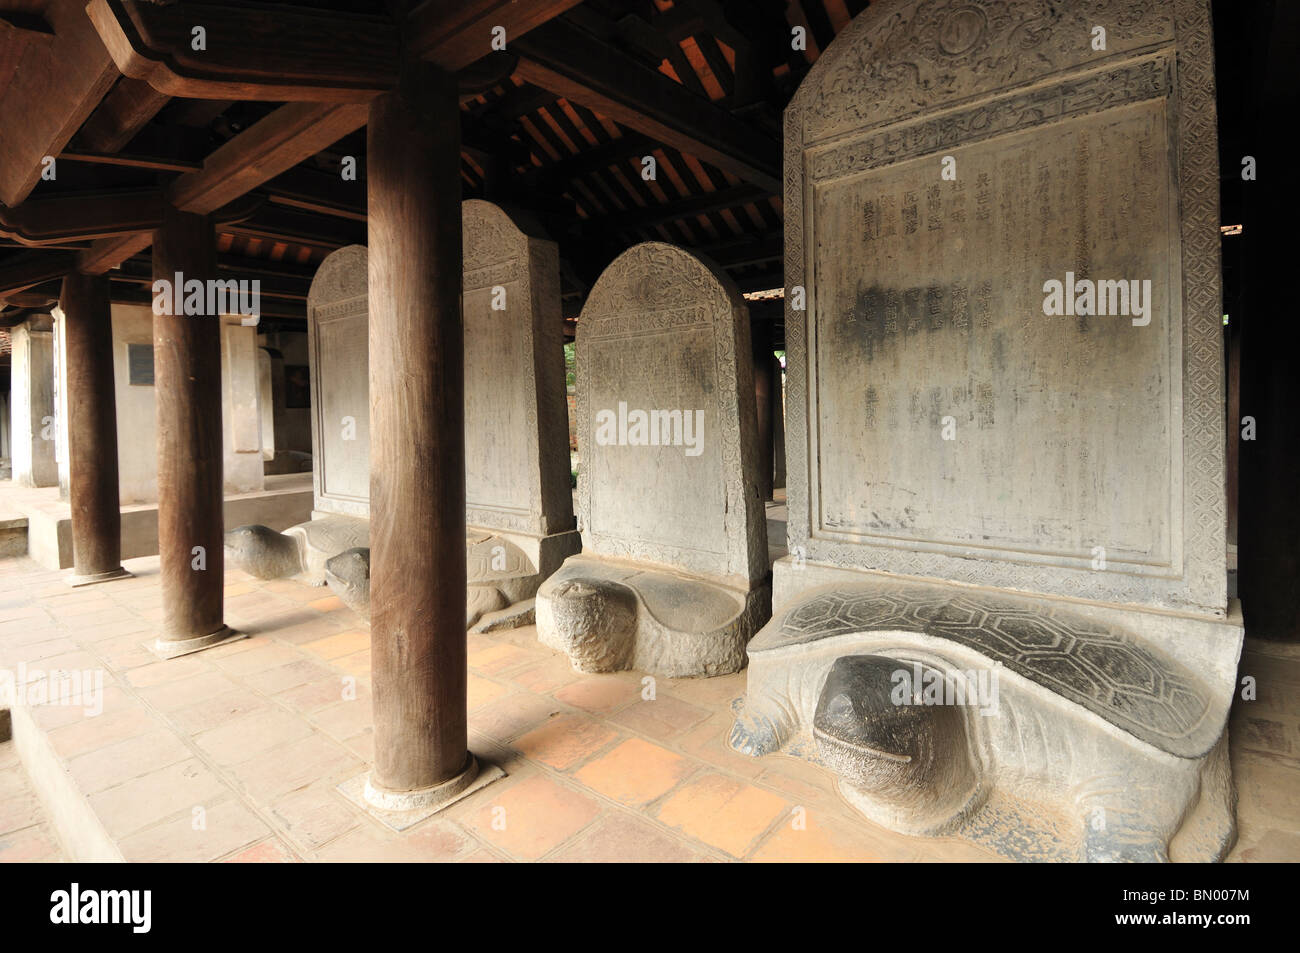 Stone Stelae on Turtles, Temple of Literature, Van Mieu, Hanoi, Vietnam ...